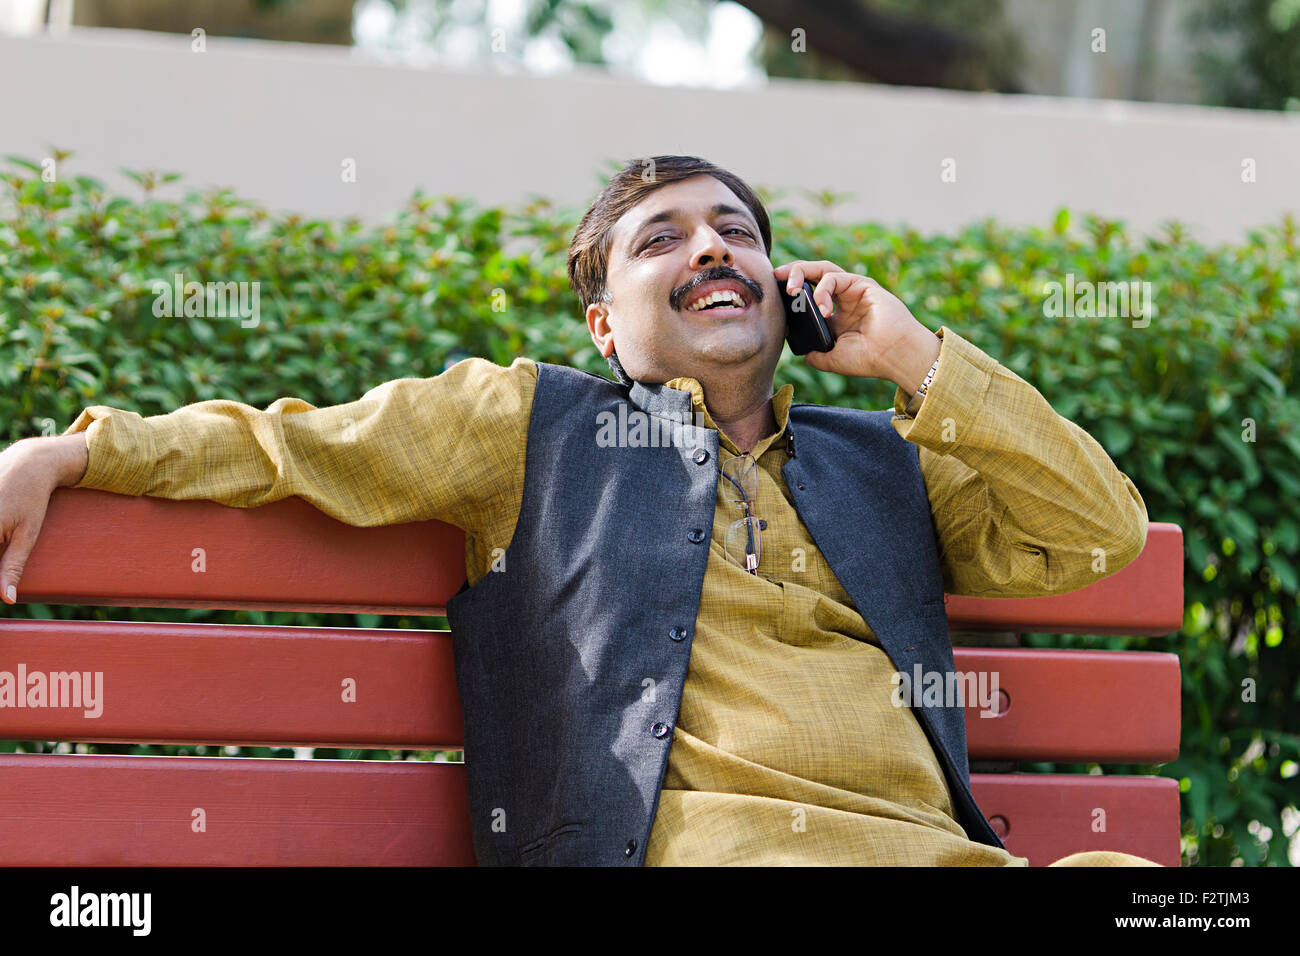 1 indian uomo adulto parco banco seduta parlando del telefono mobile Foto Stock